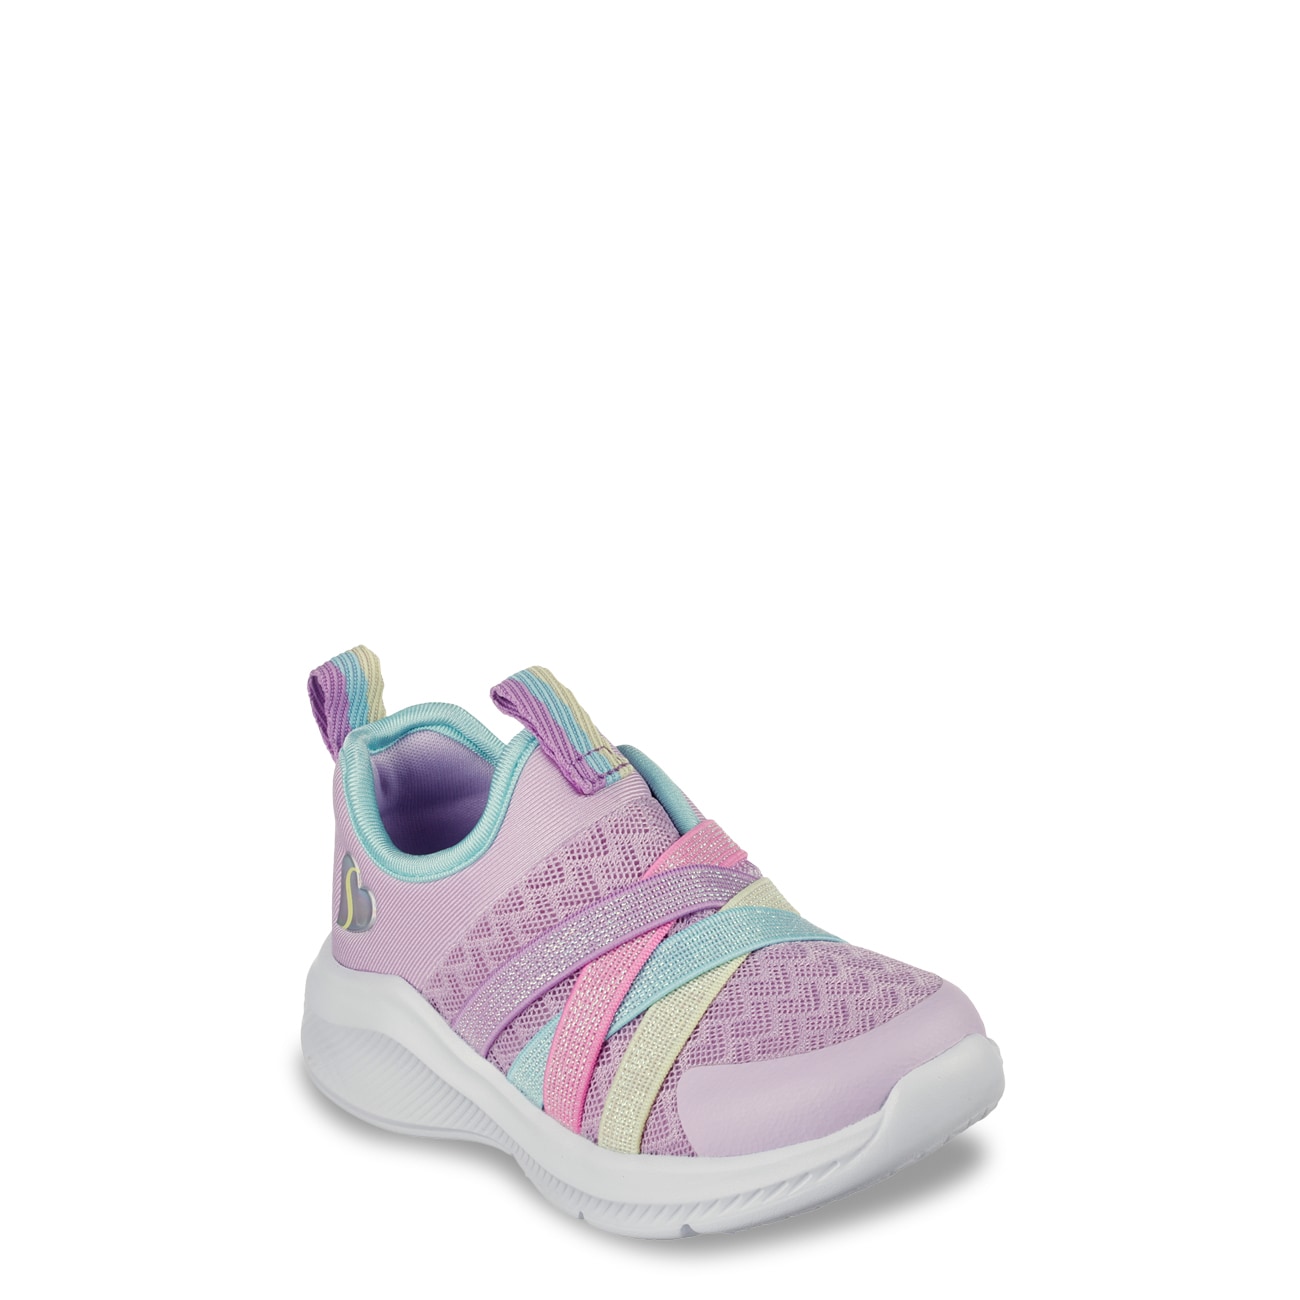 Toddler Girls' Sole Swifters - Colourful Daze Slip-On Sneaker